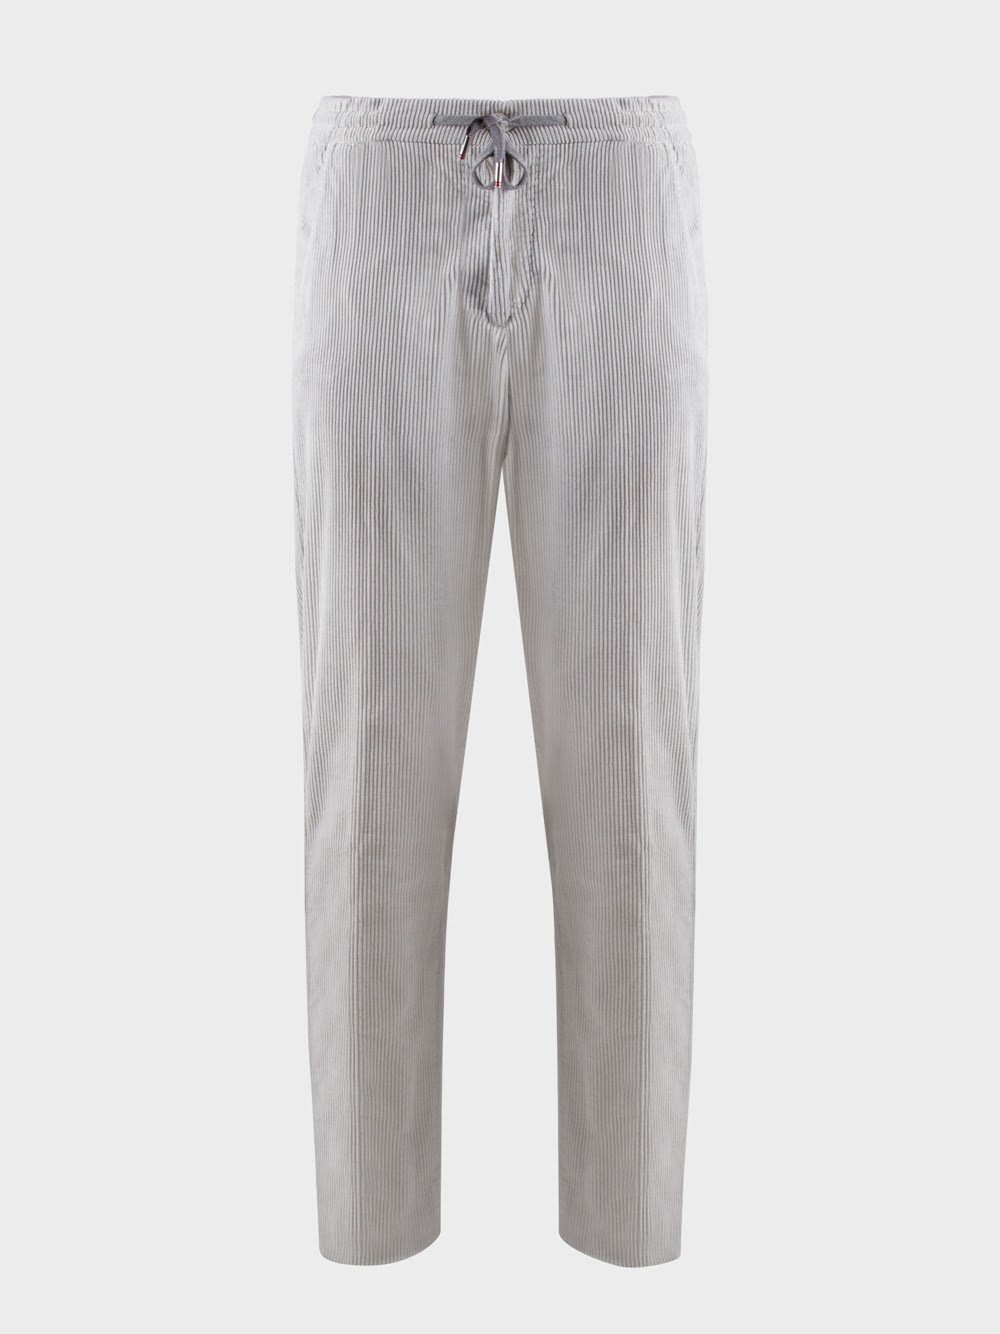 Sartorio Napoli Grey Drawstring Pants